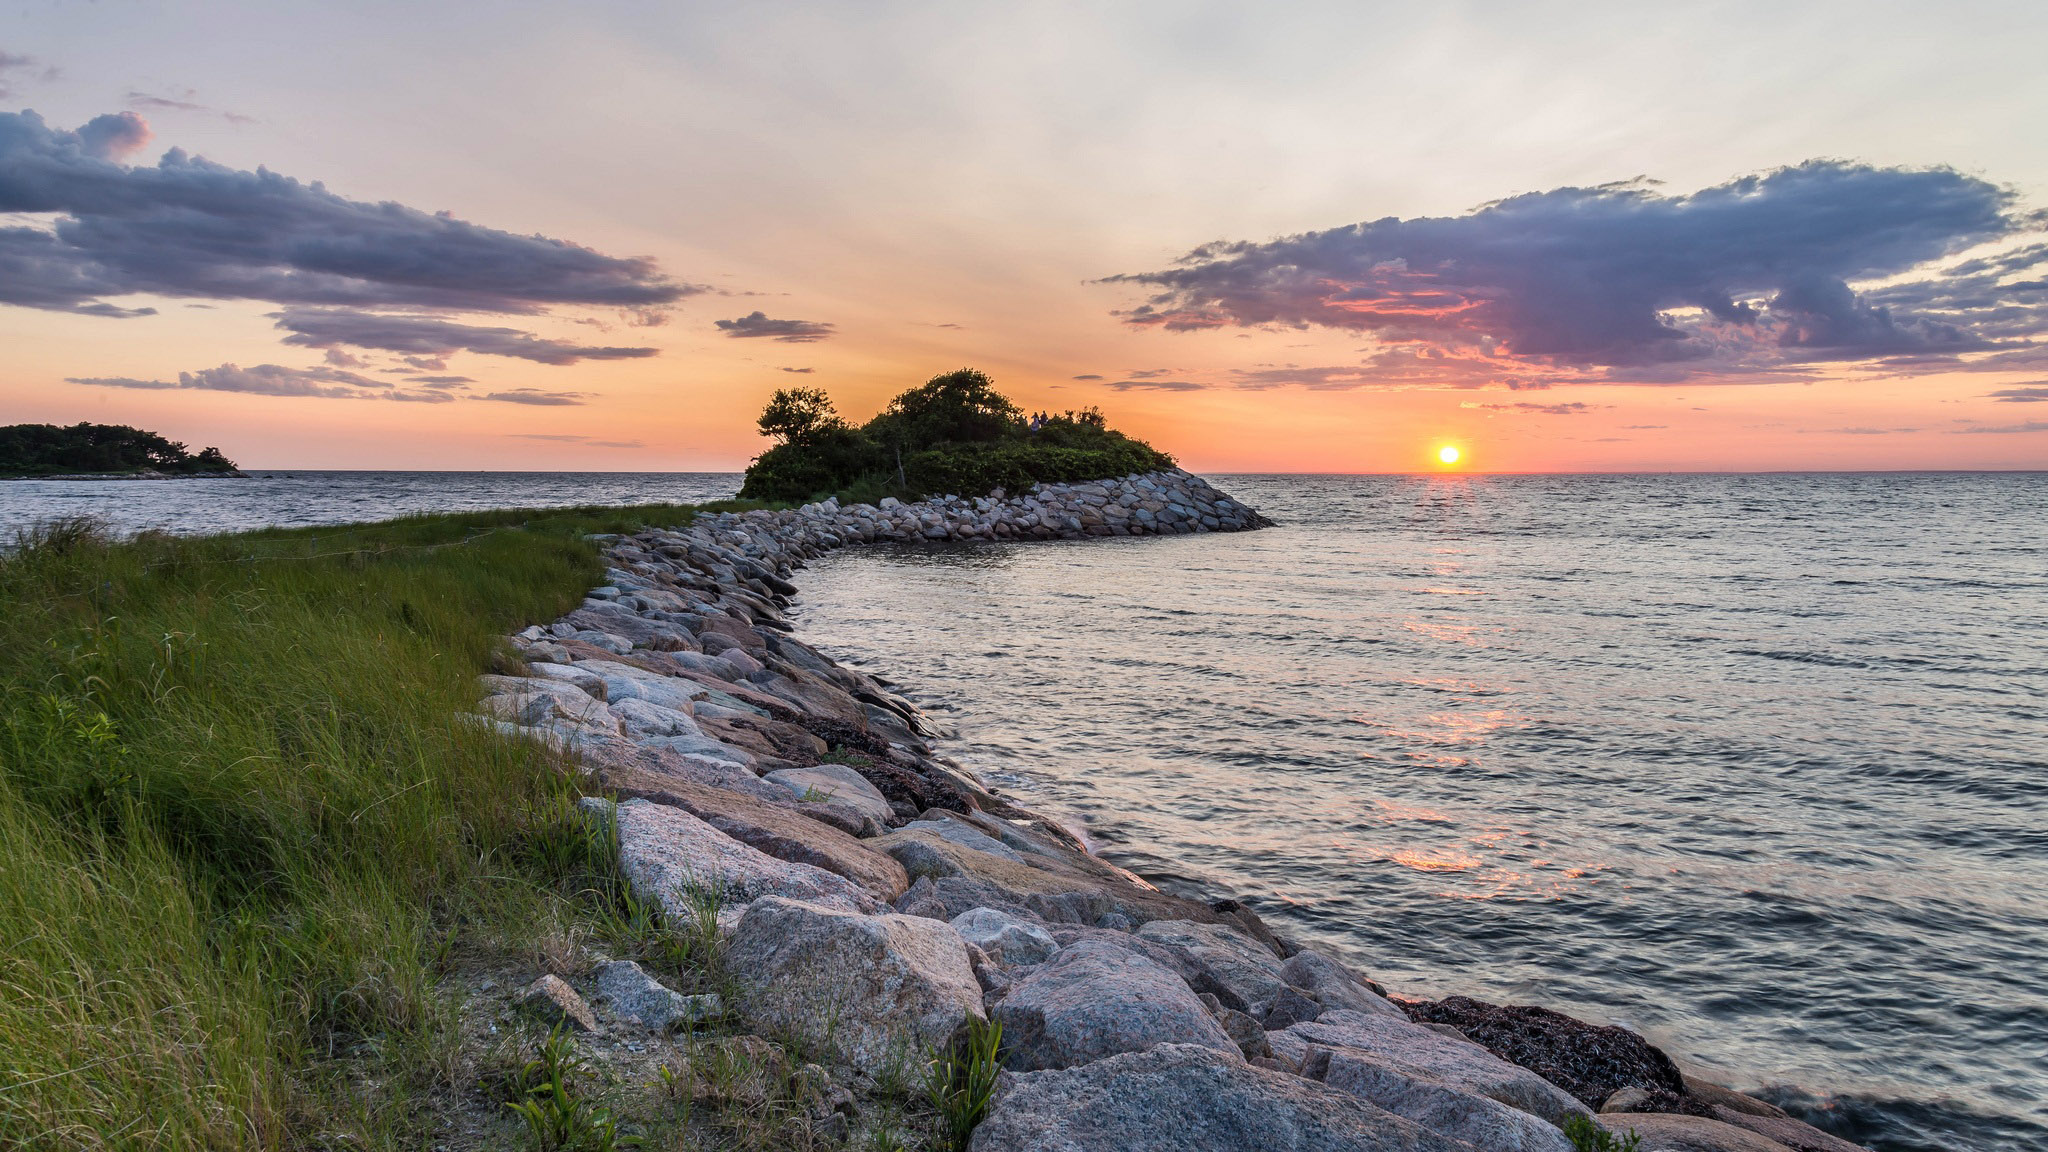 Sunset and Dusk landscape over Cape Cod, Massachusetts image Free